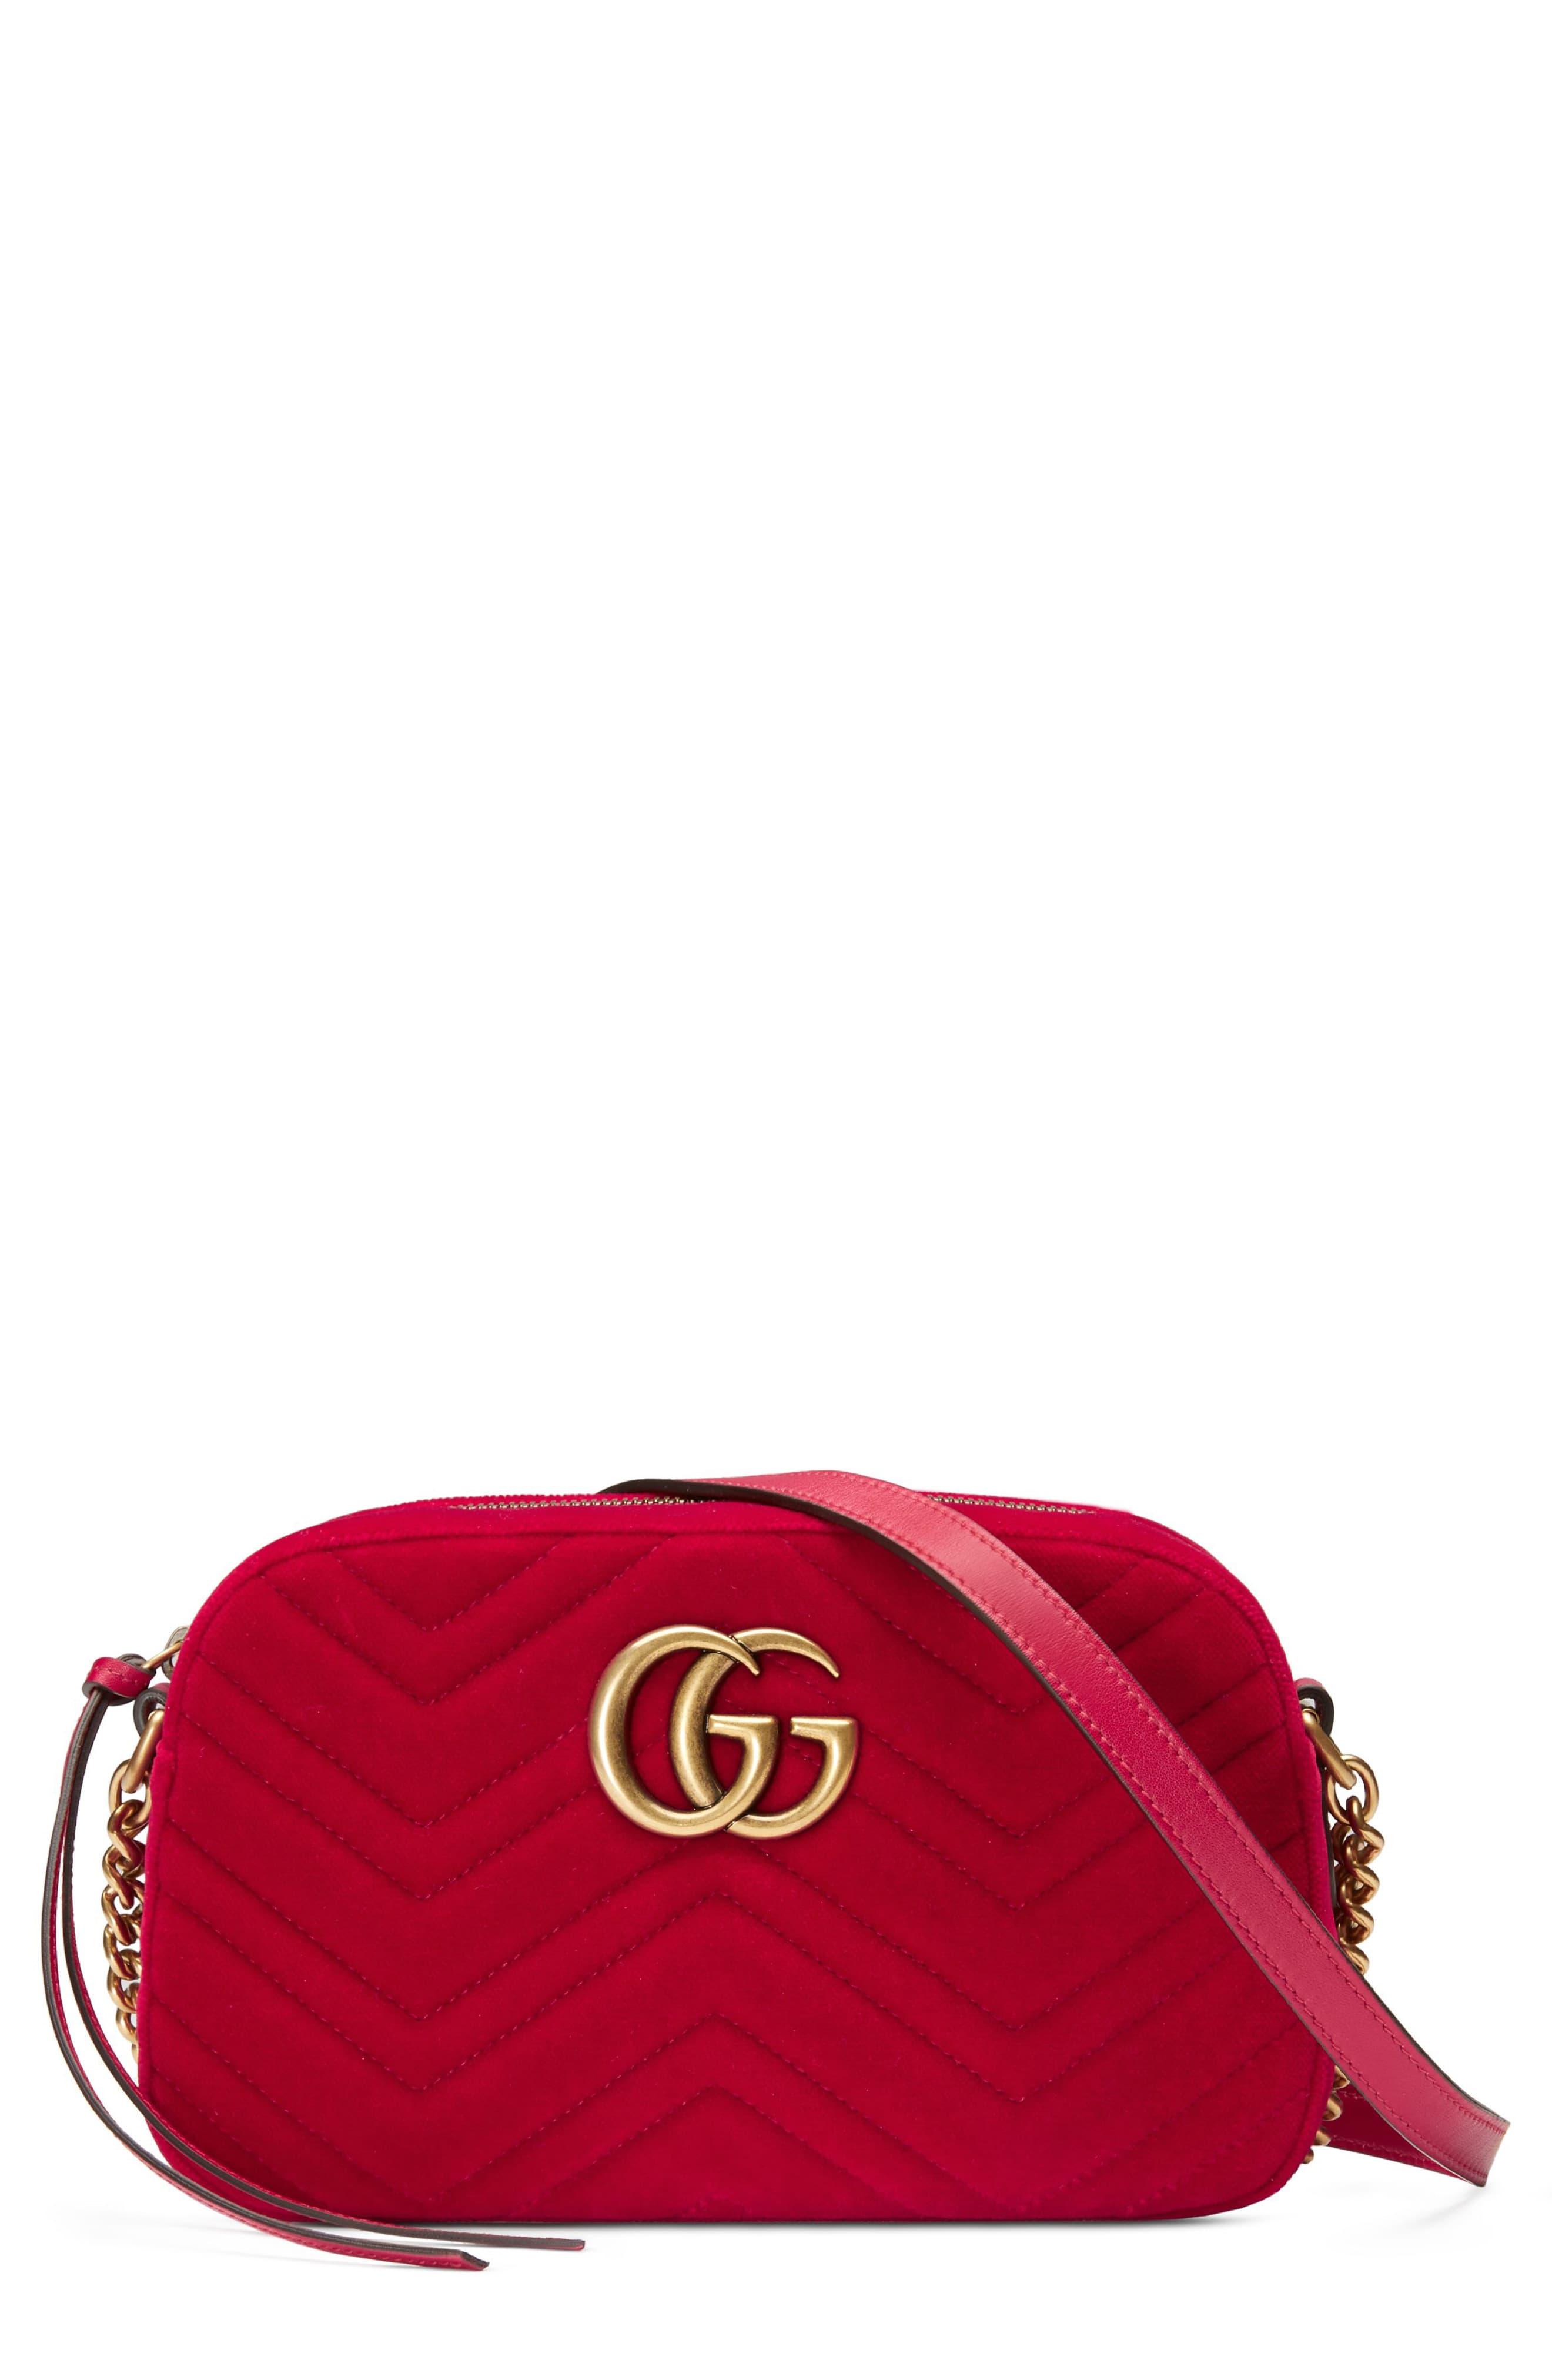 Gucci Small Gg Marmont 2.0 Matelassé Velvet Shoulder Bag in Red - Lyst